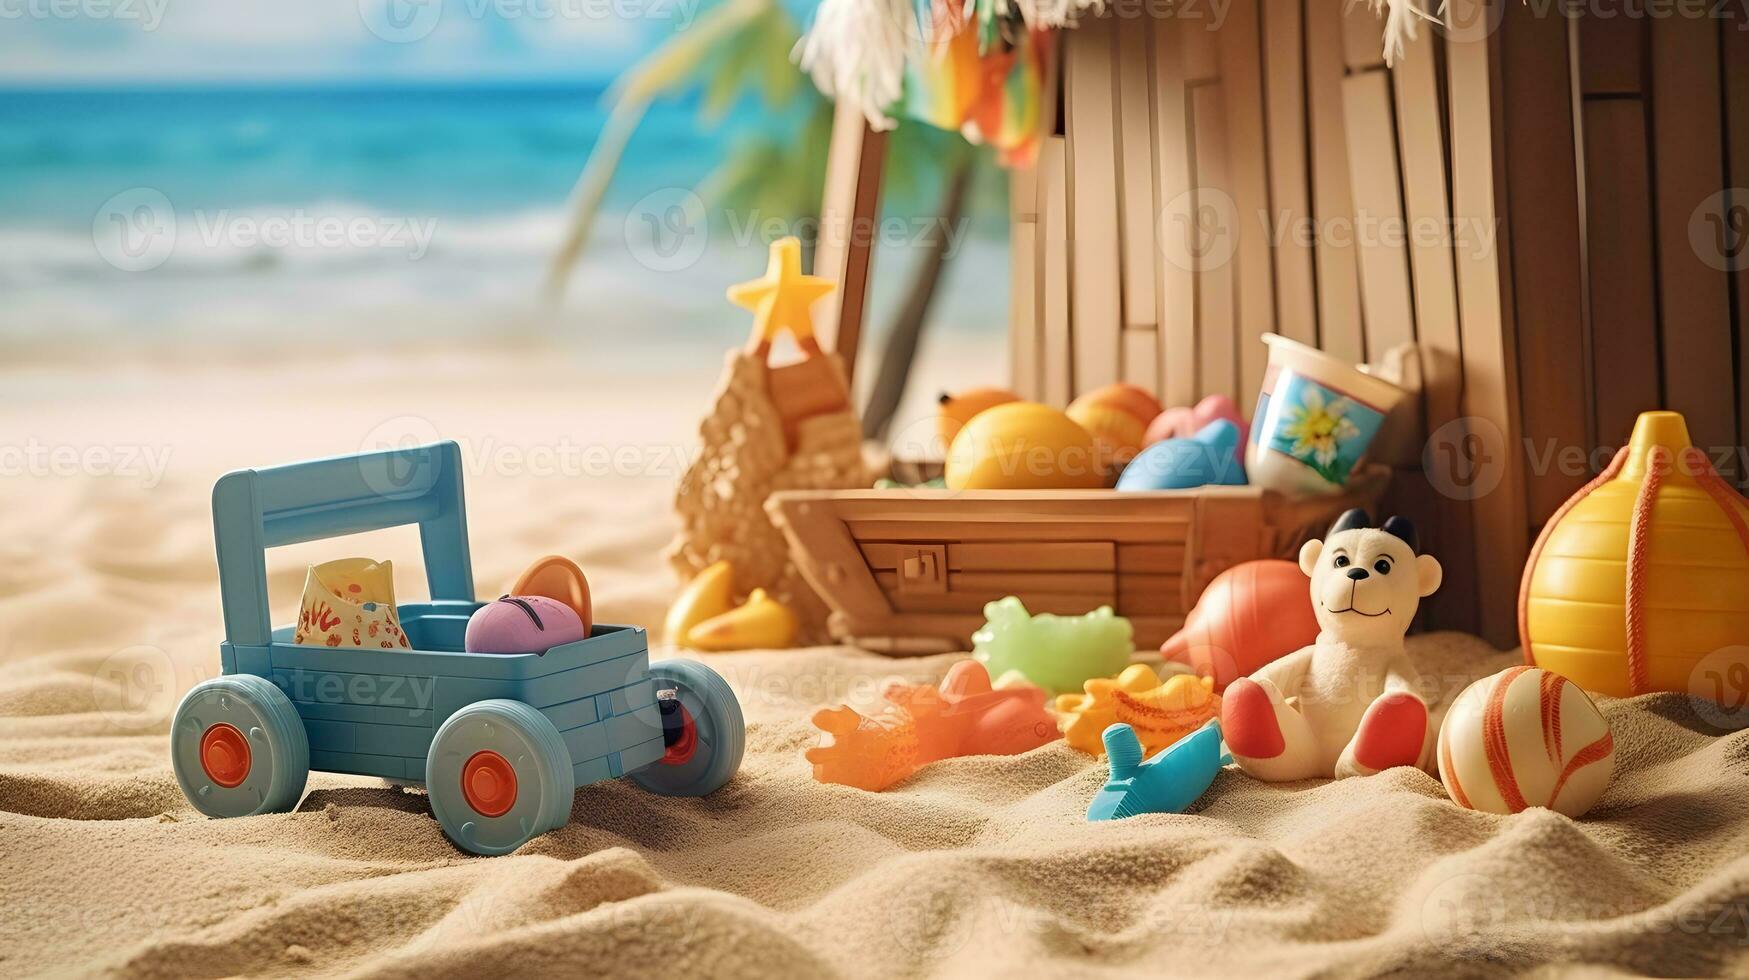 Truck with toys on sandy beach near house. Summer vacation concept photo